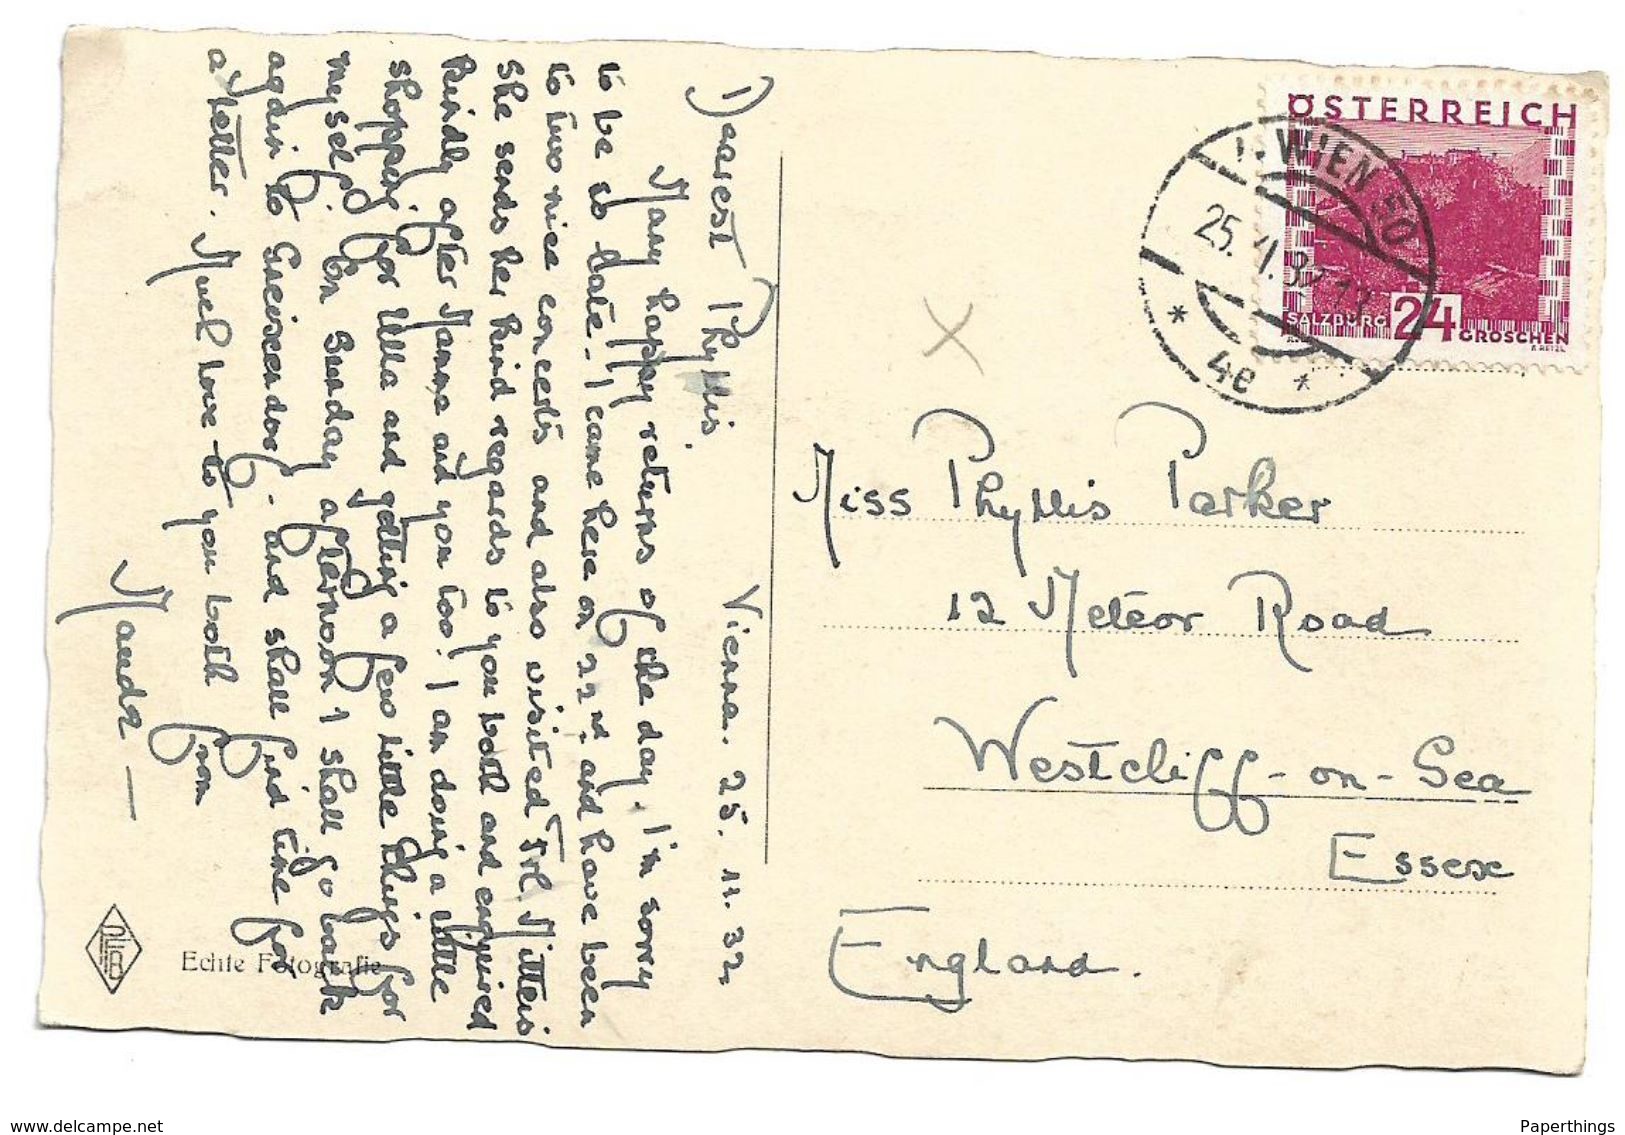 Old Real Photograph Postcard, Austria, Belvedere, 84 Echte Fotografie, 1932. - Belvedere